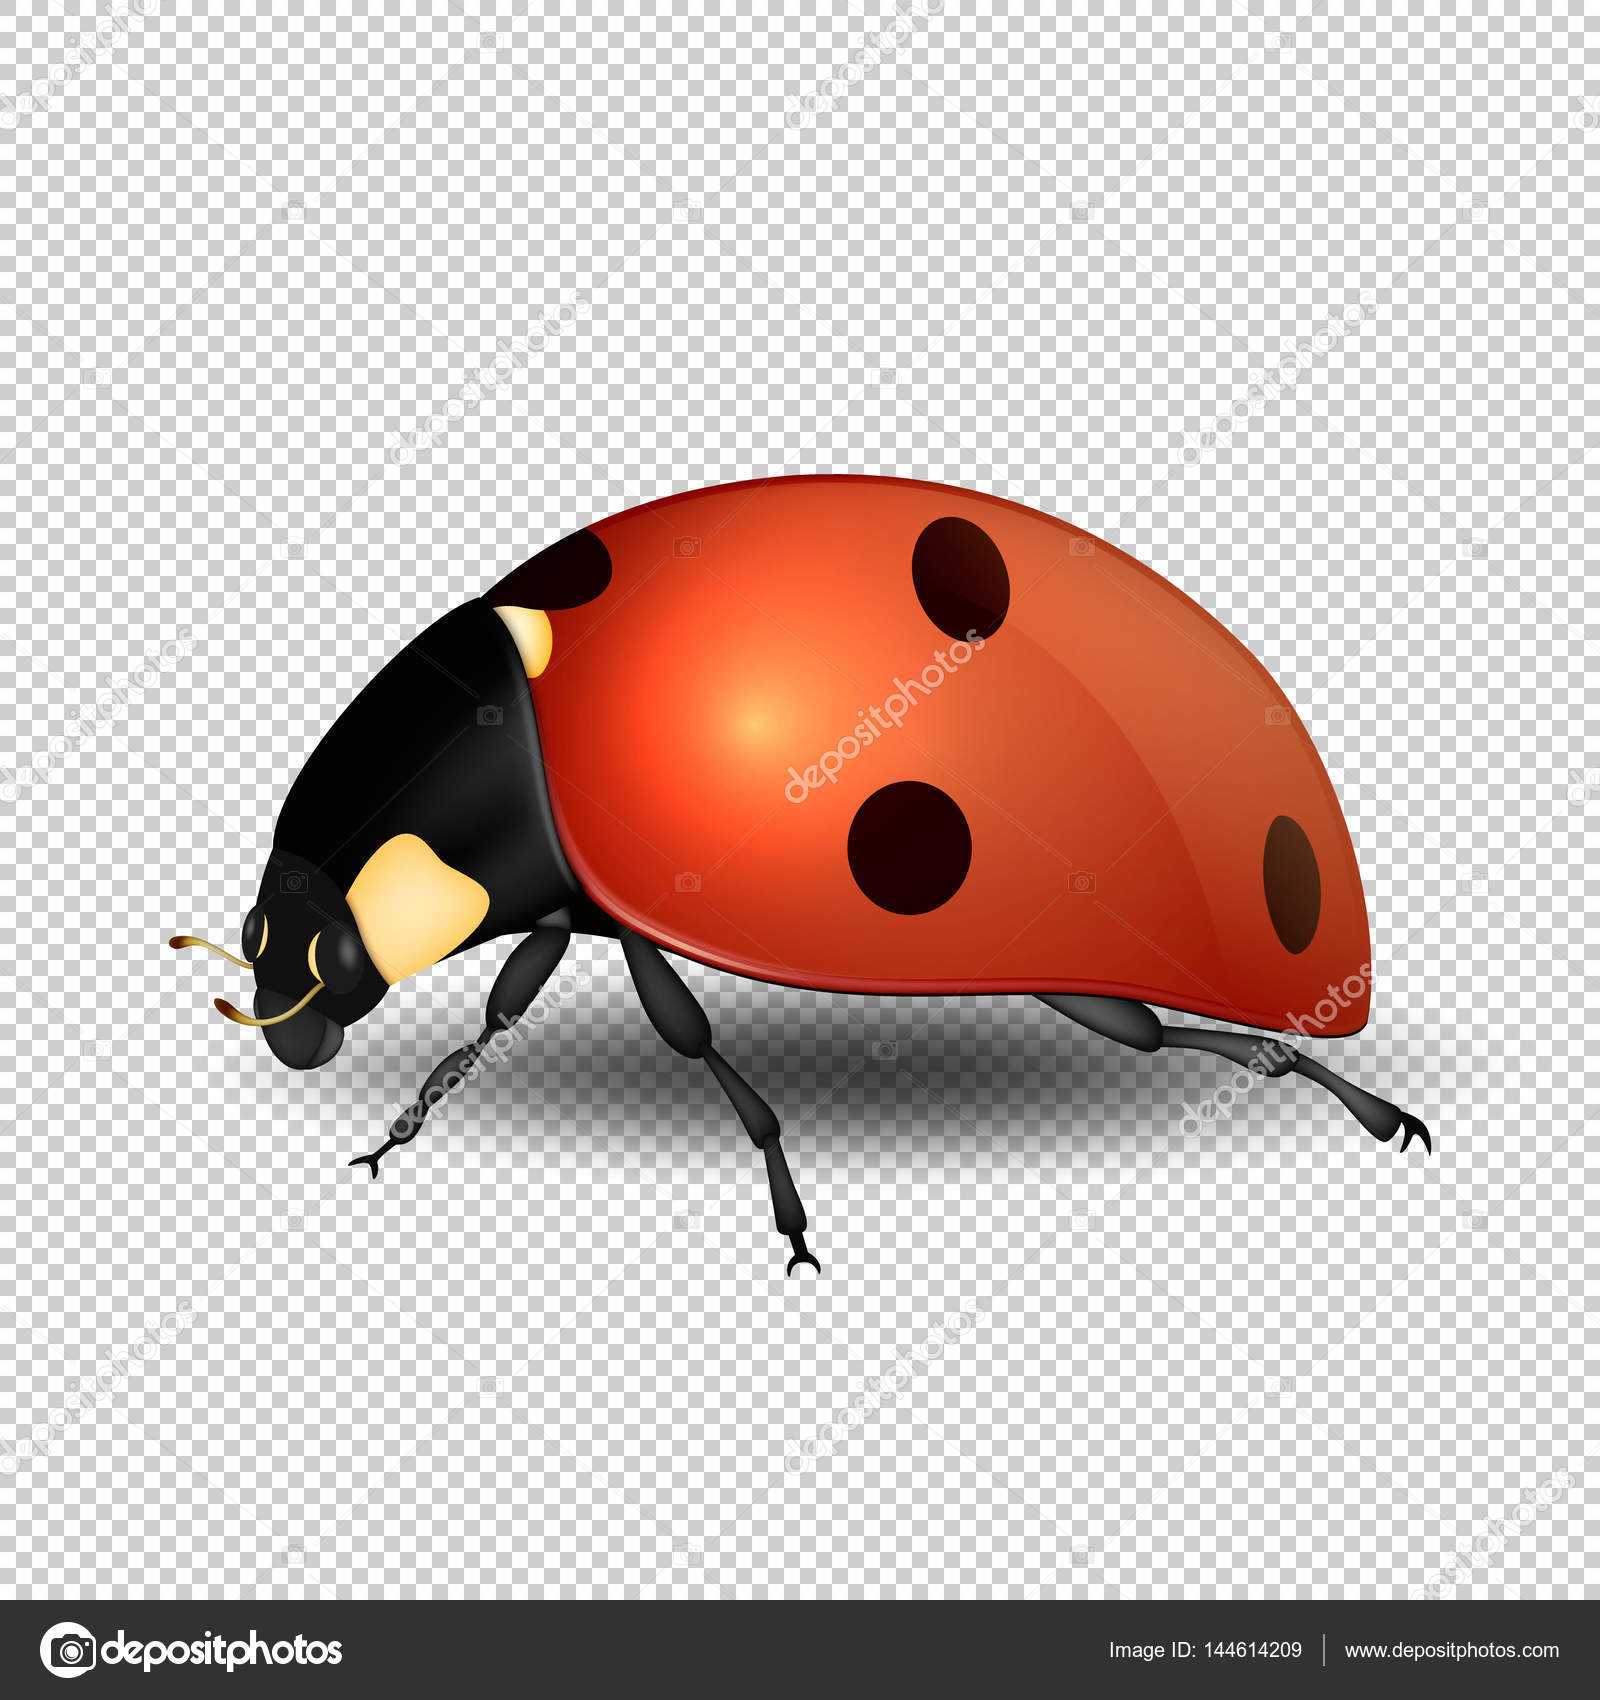 Blank Ladybug Template | Vector Close Up Realistic Ladybug Pertaining To Blank Ladybug Template